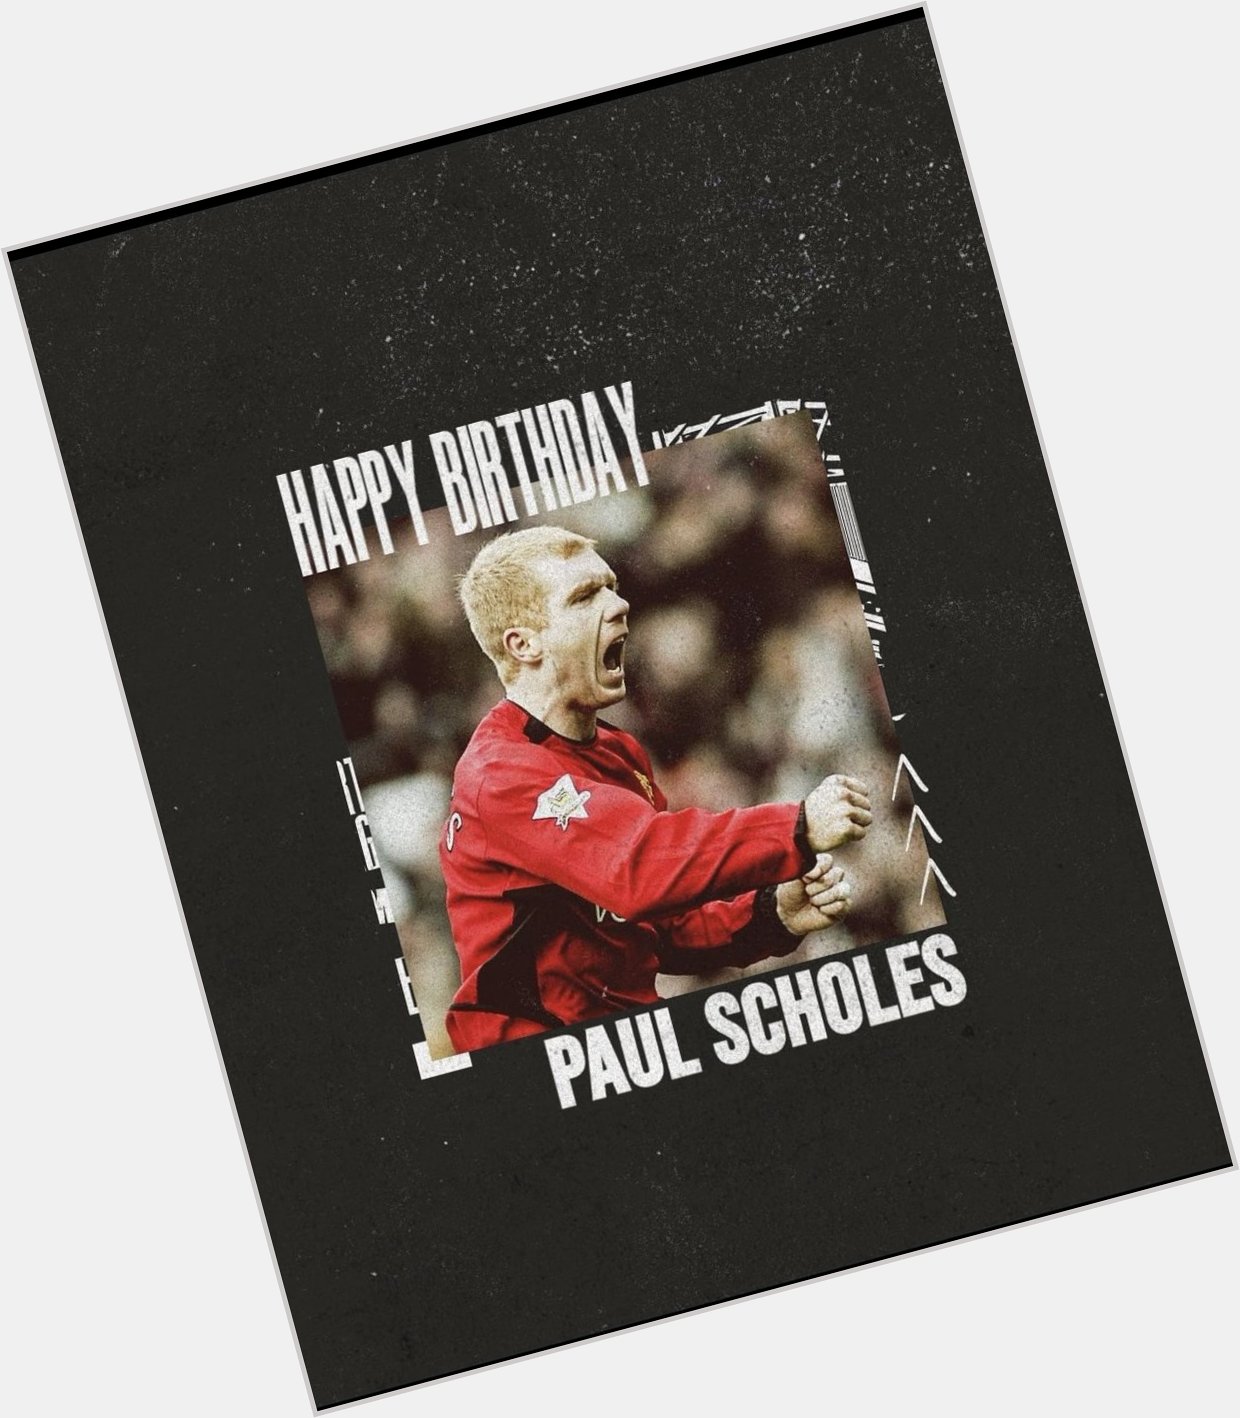 Happy birthday Paul Scholes.  A true midfield maestro 